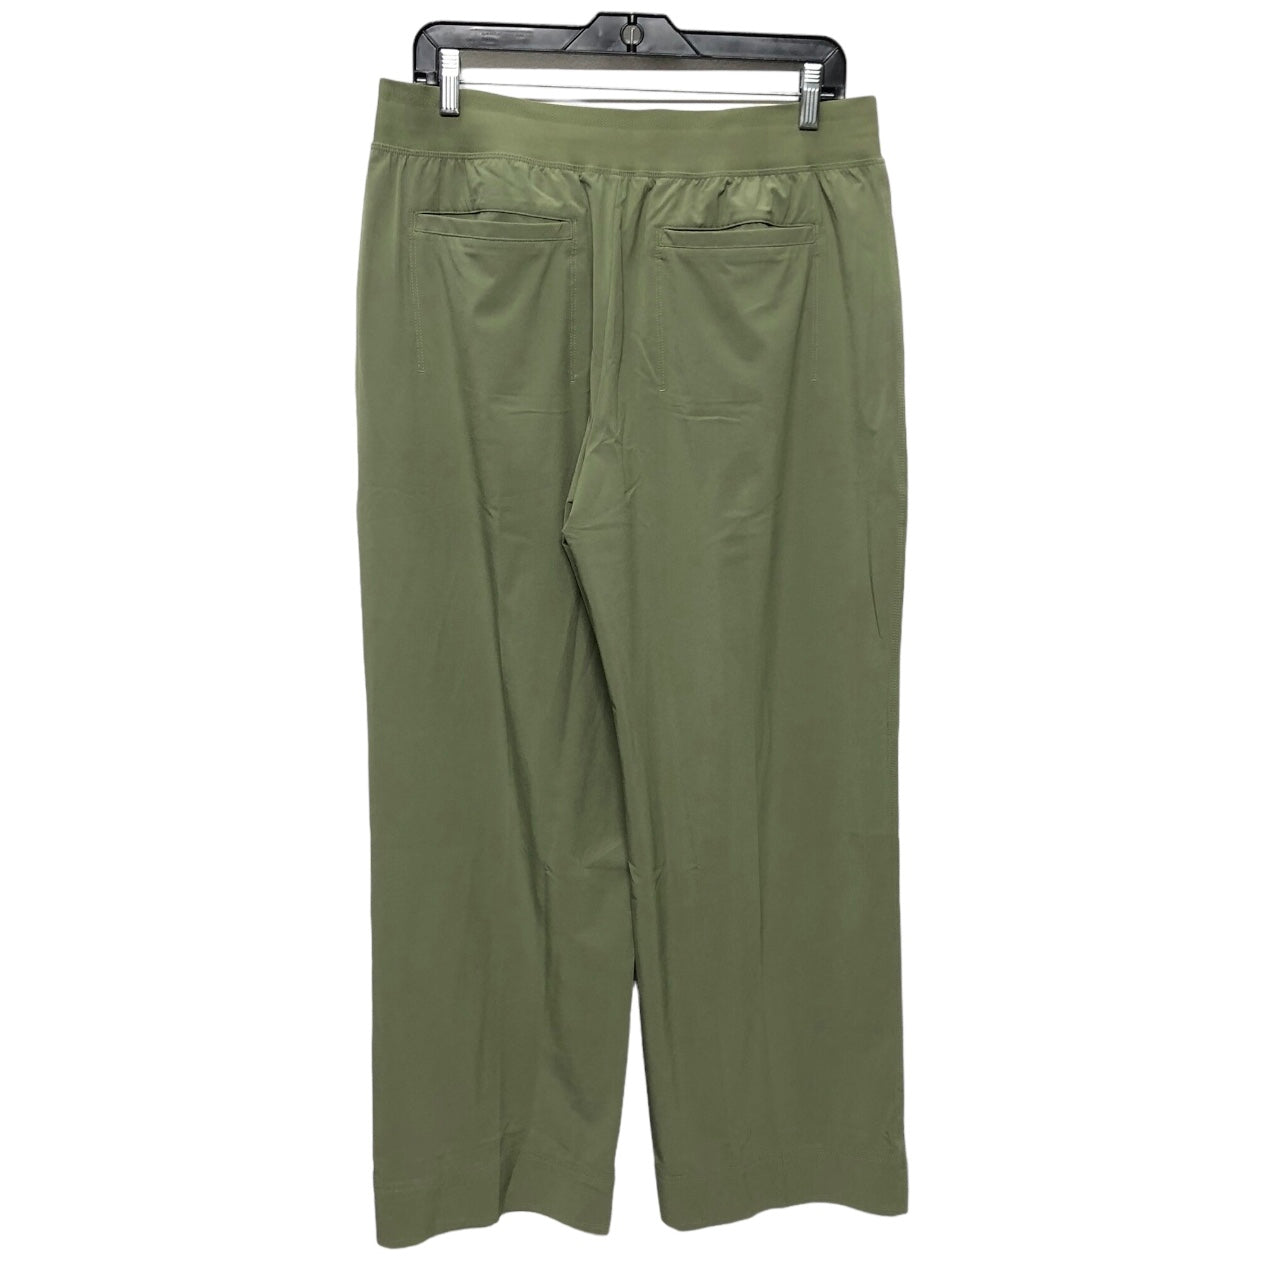 Green Athletic Pants Athleta, Size 12